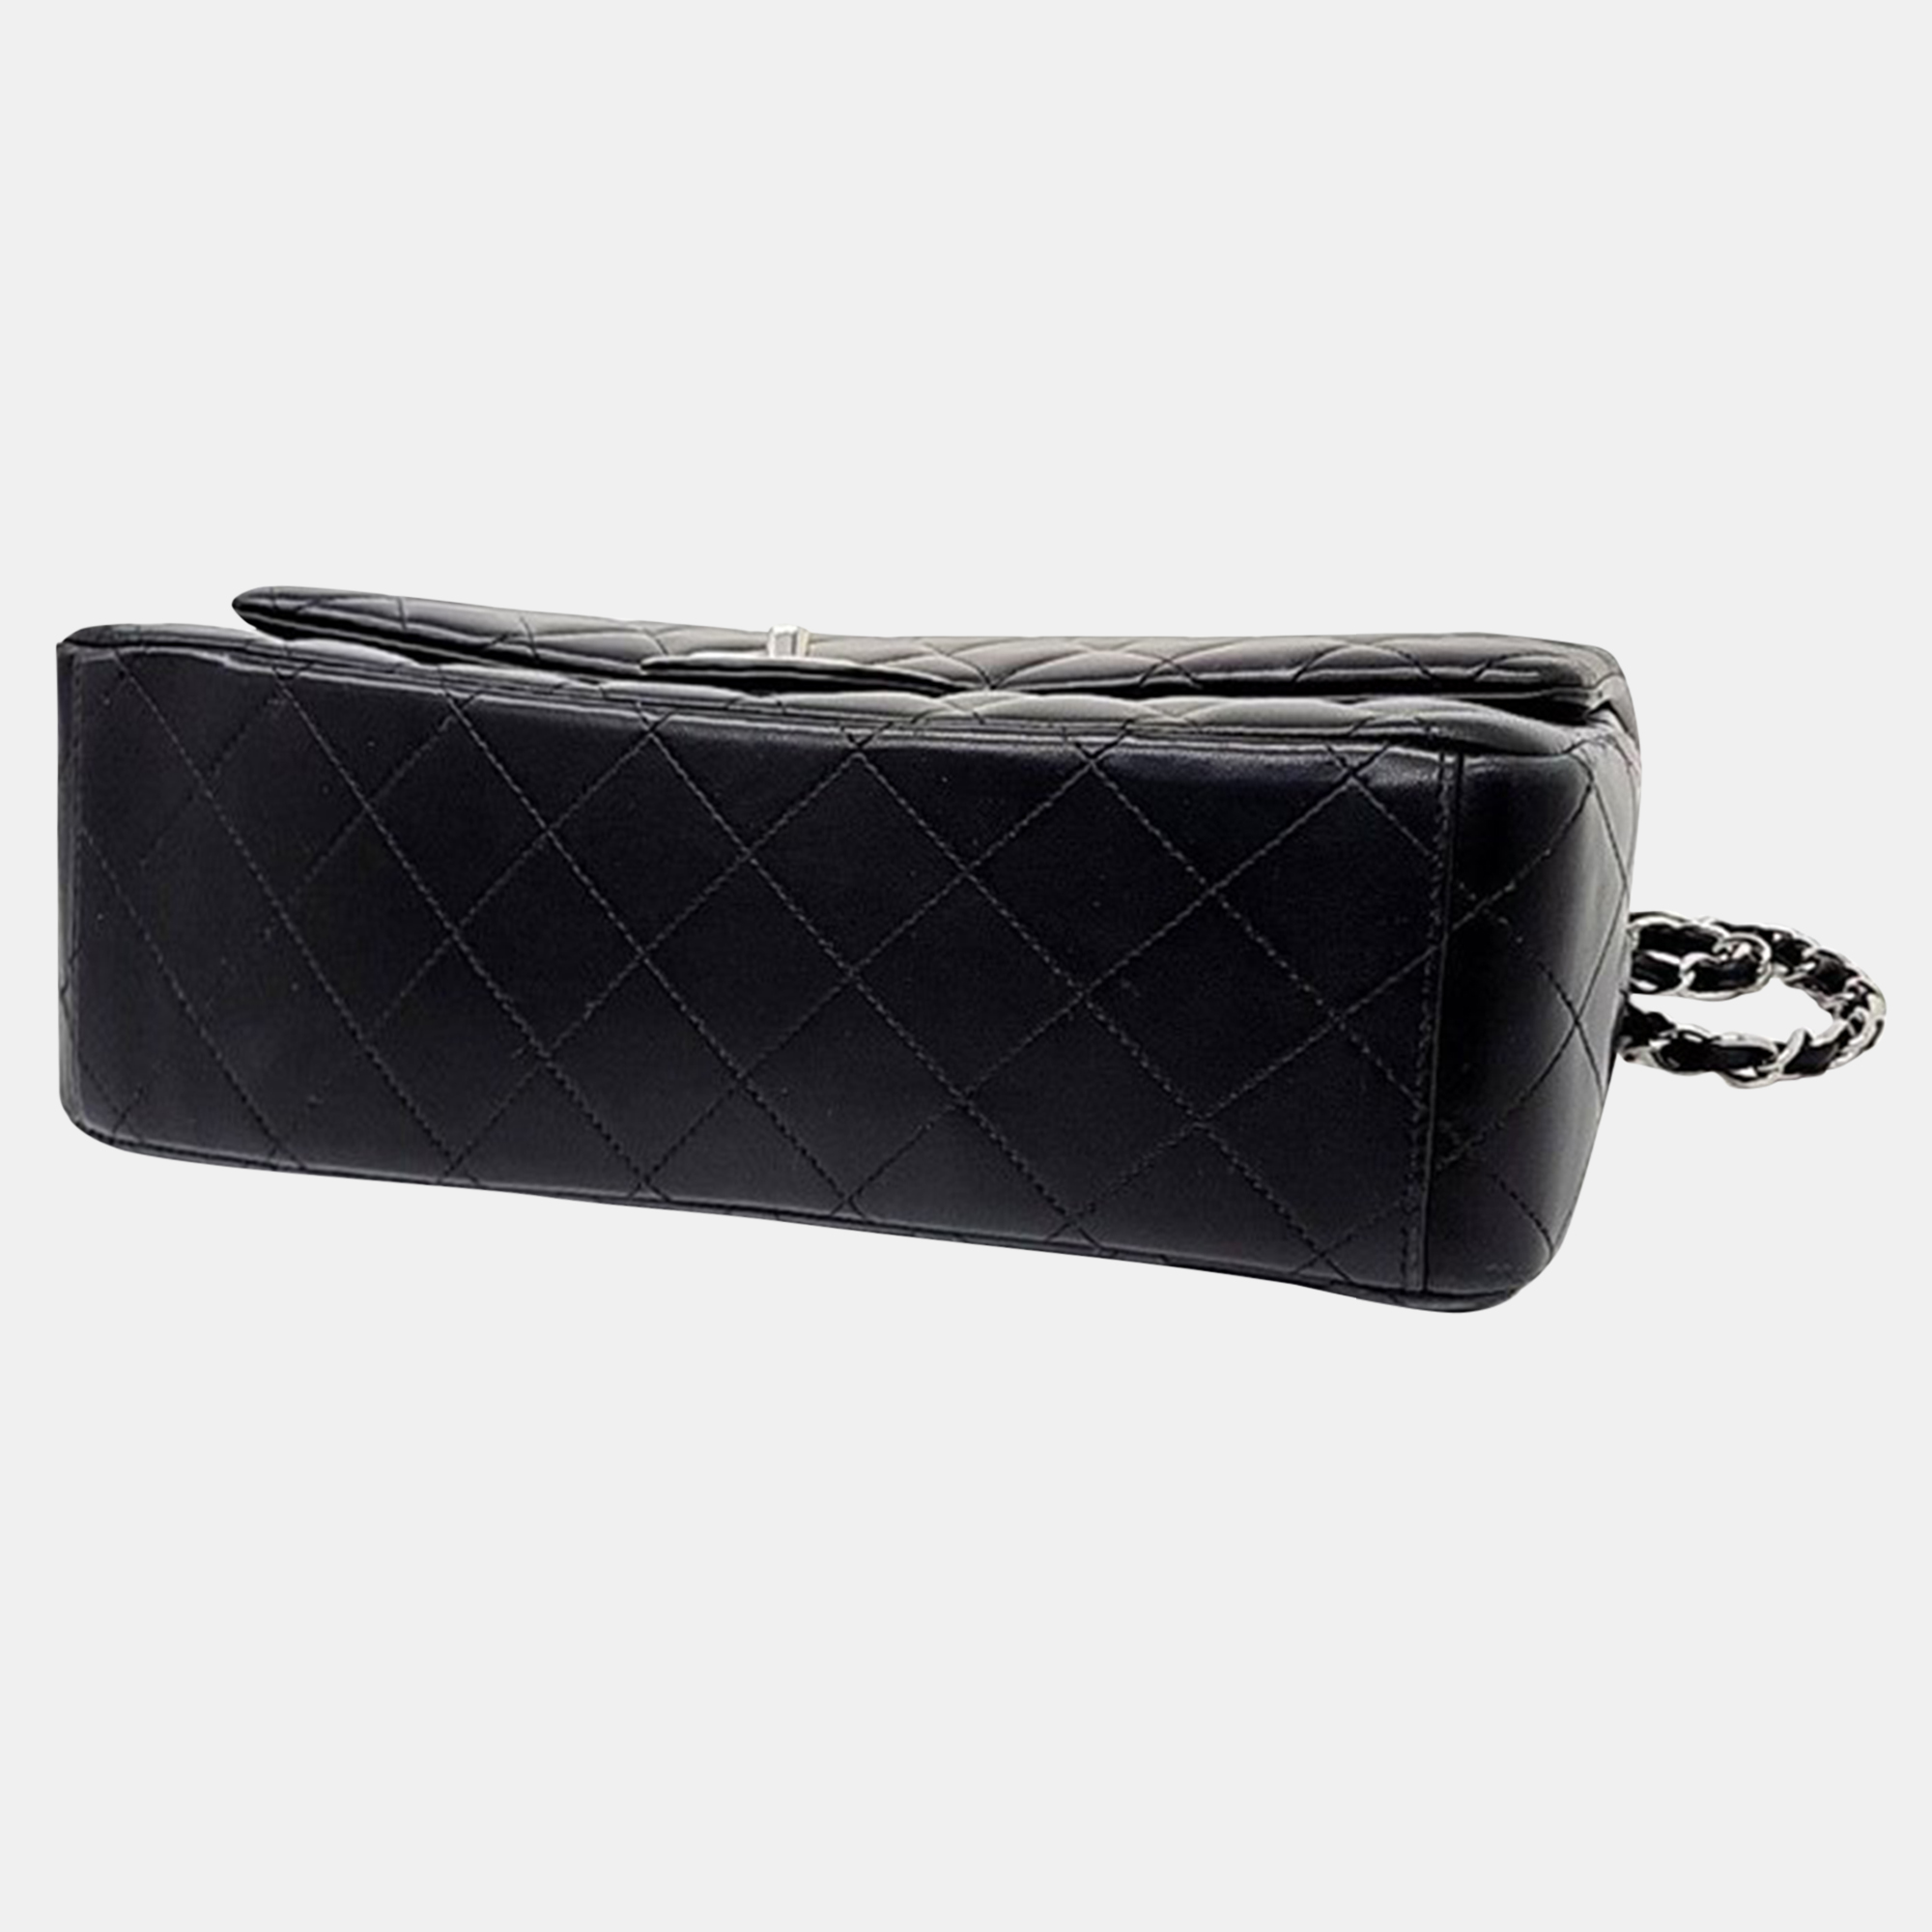 Chanel Black Leather Classic Maxi